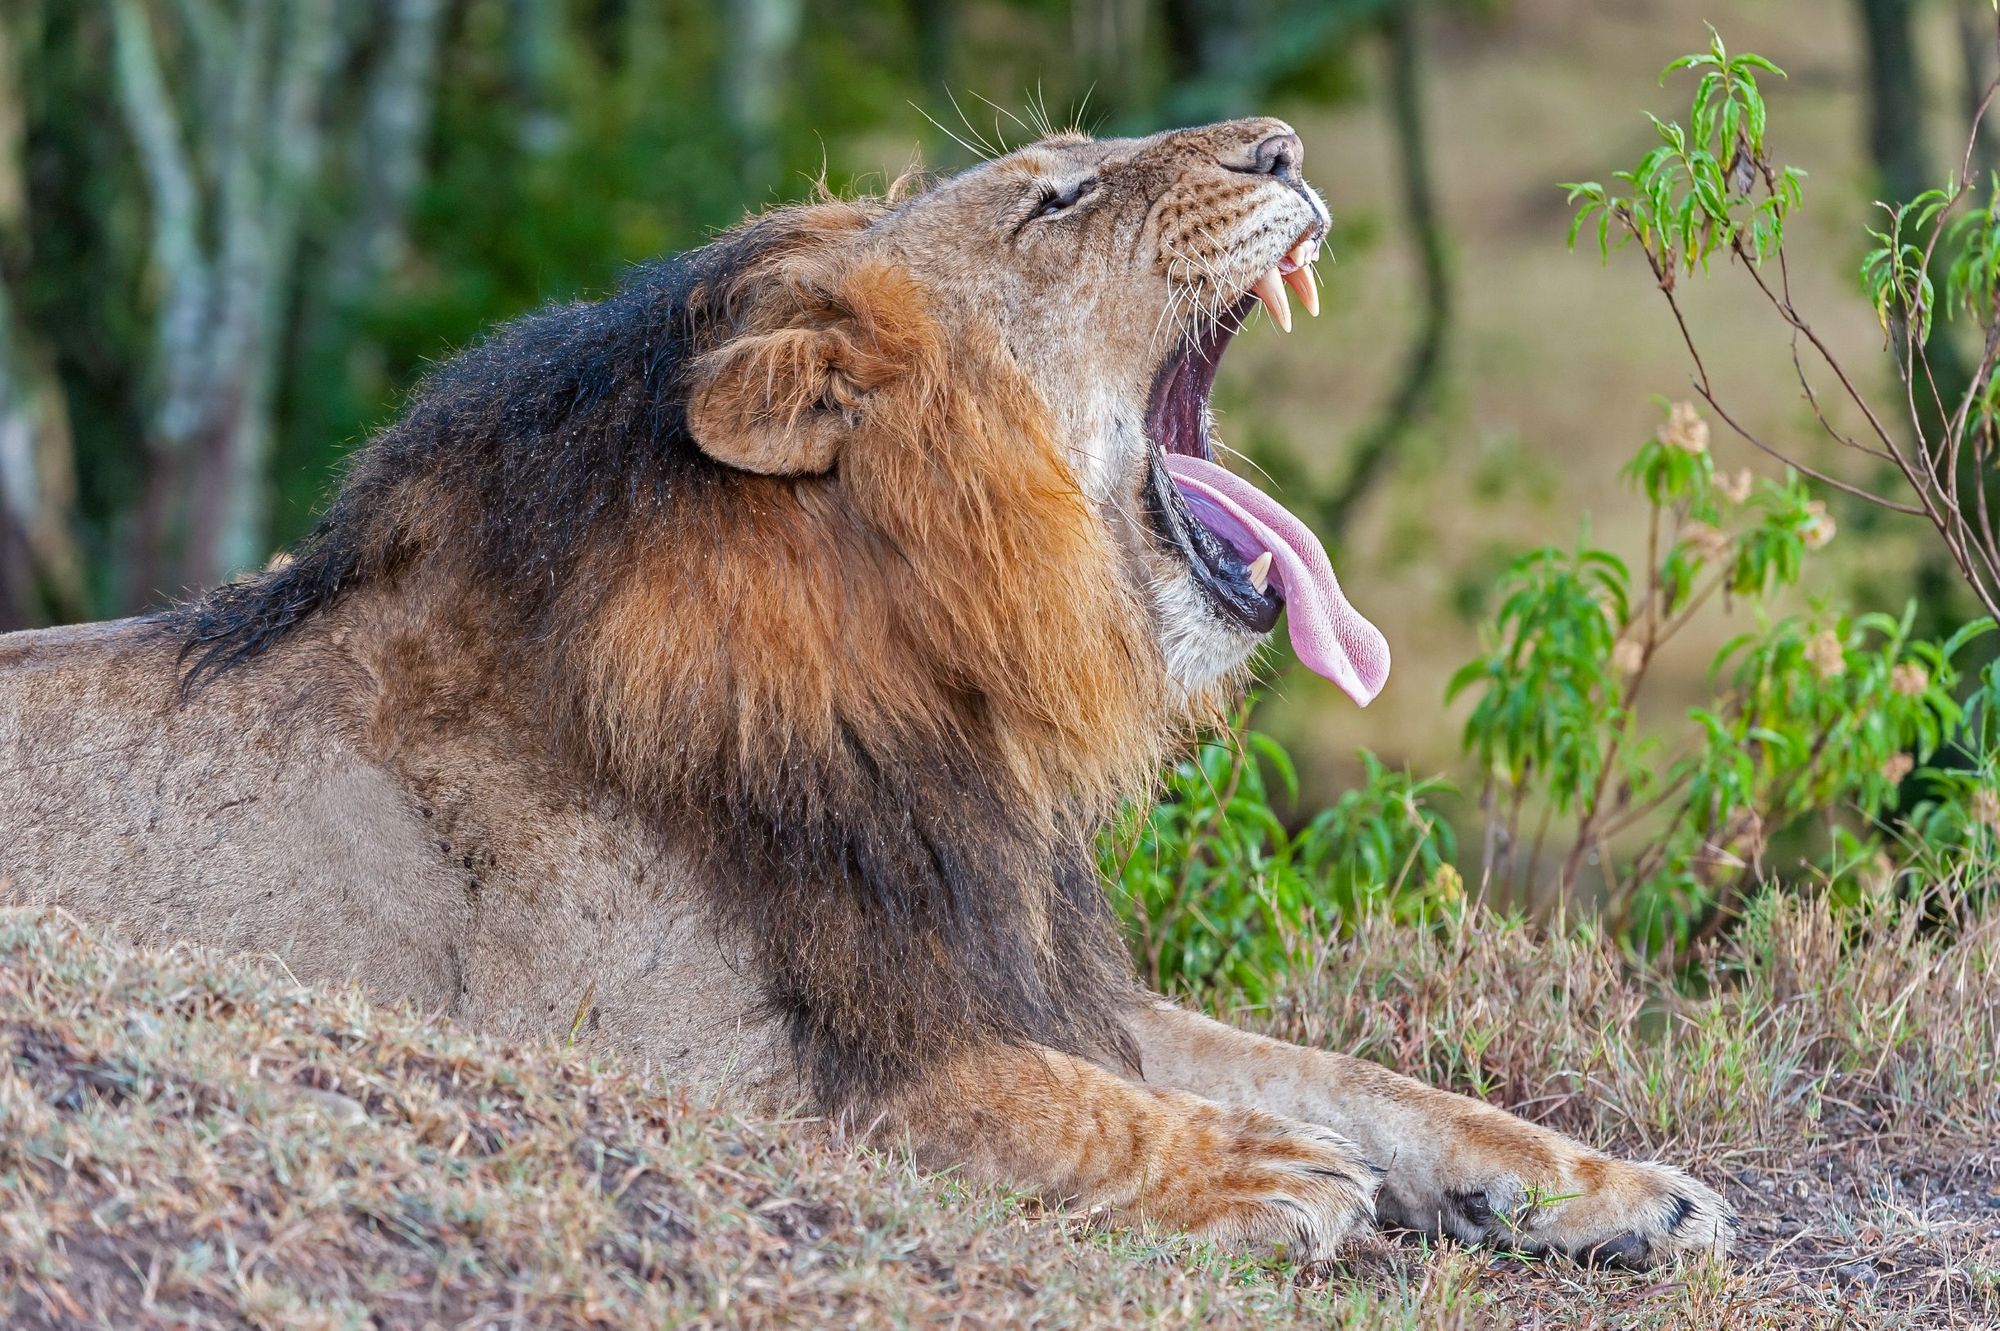 An African lion yawns in the Ol Pejeta Conservancy in Kenya. Photo: Getty